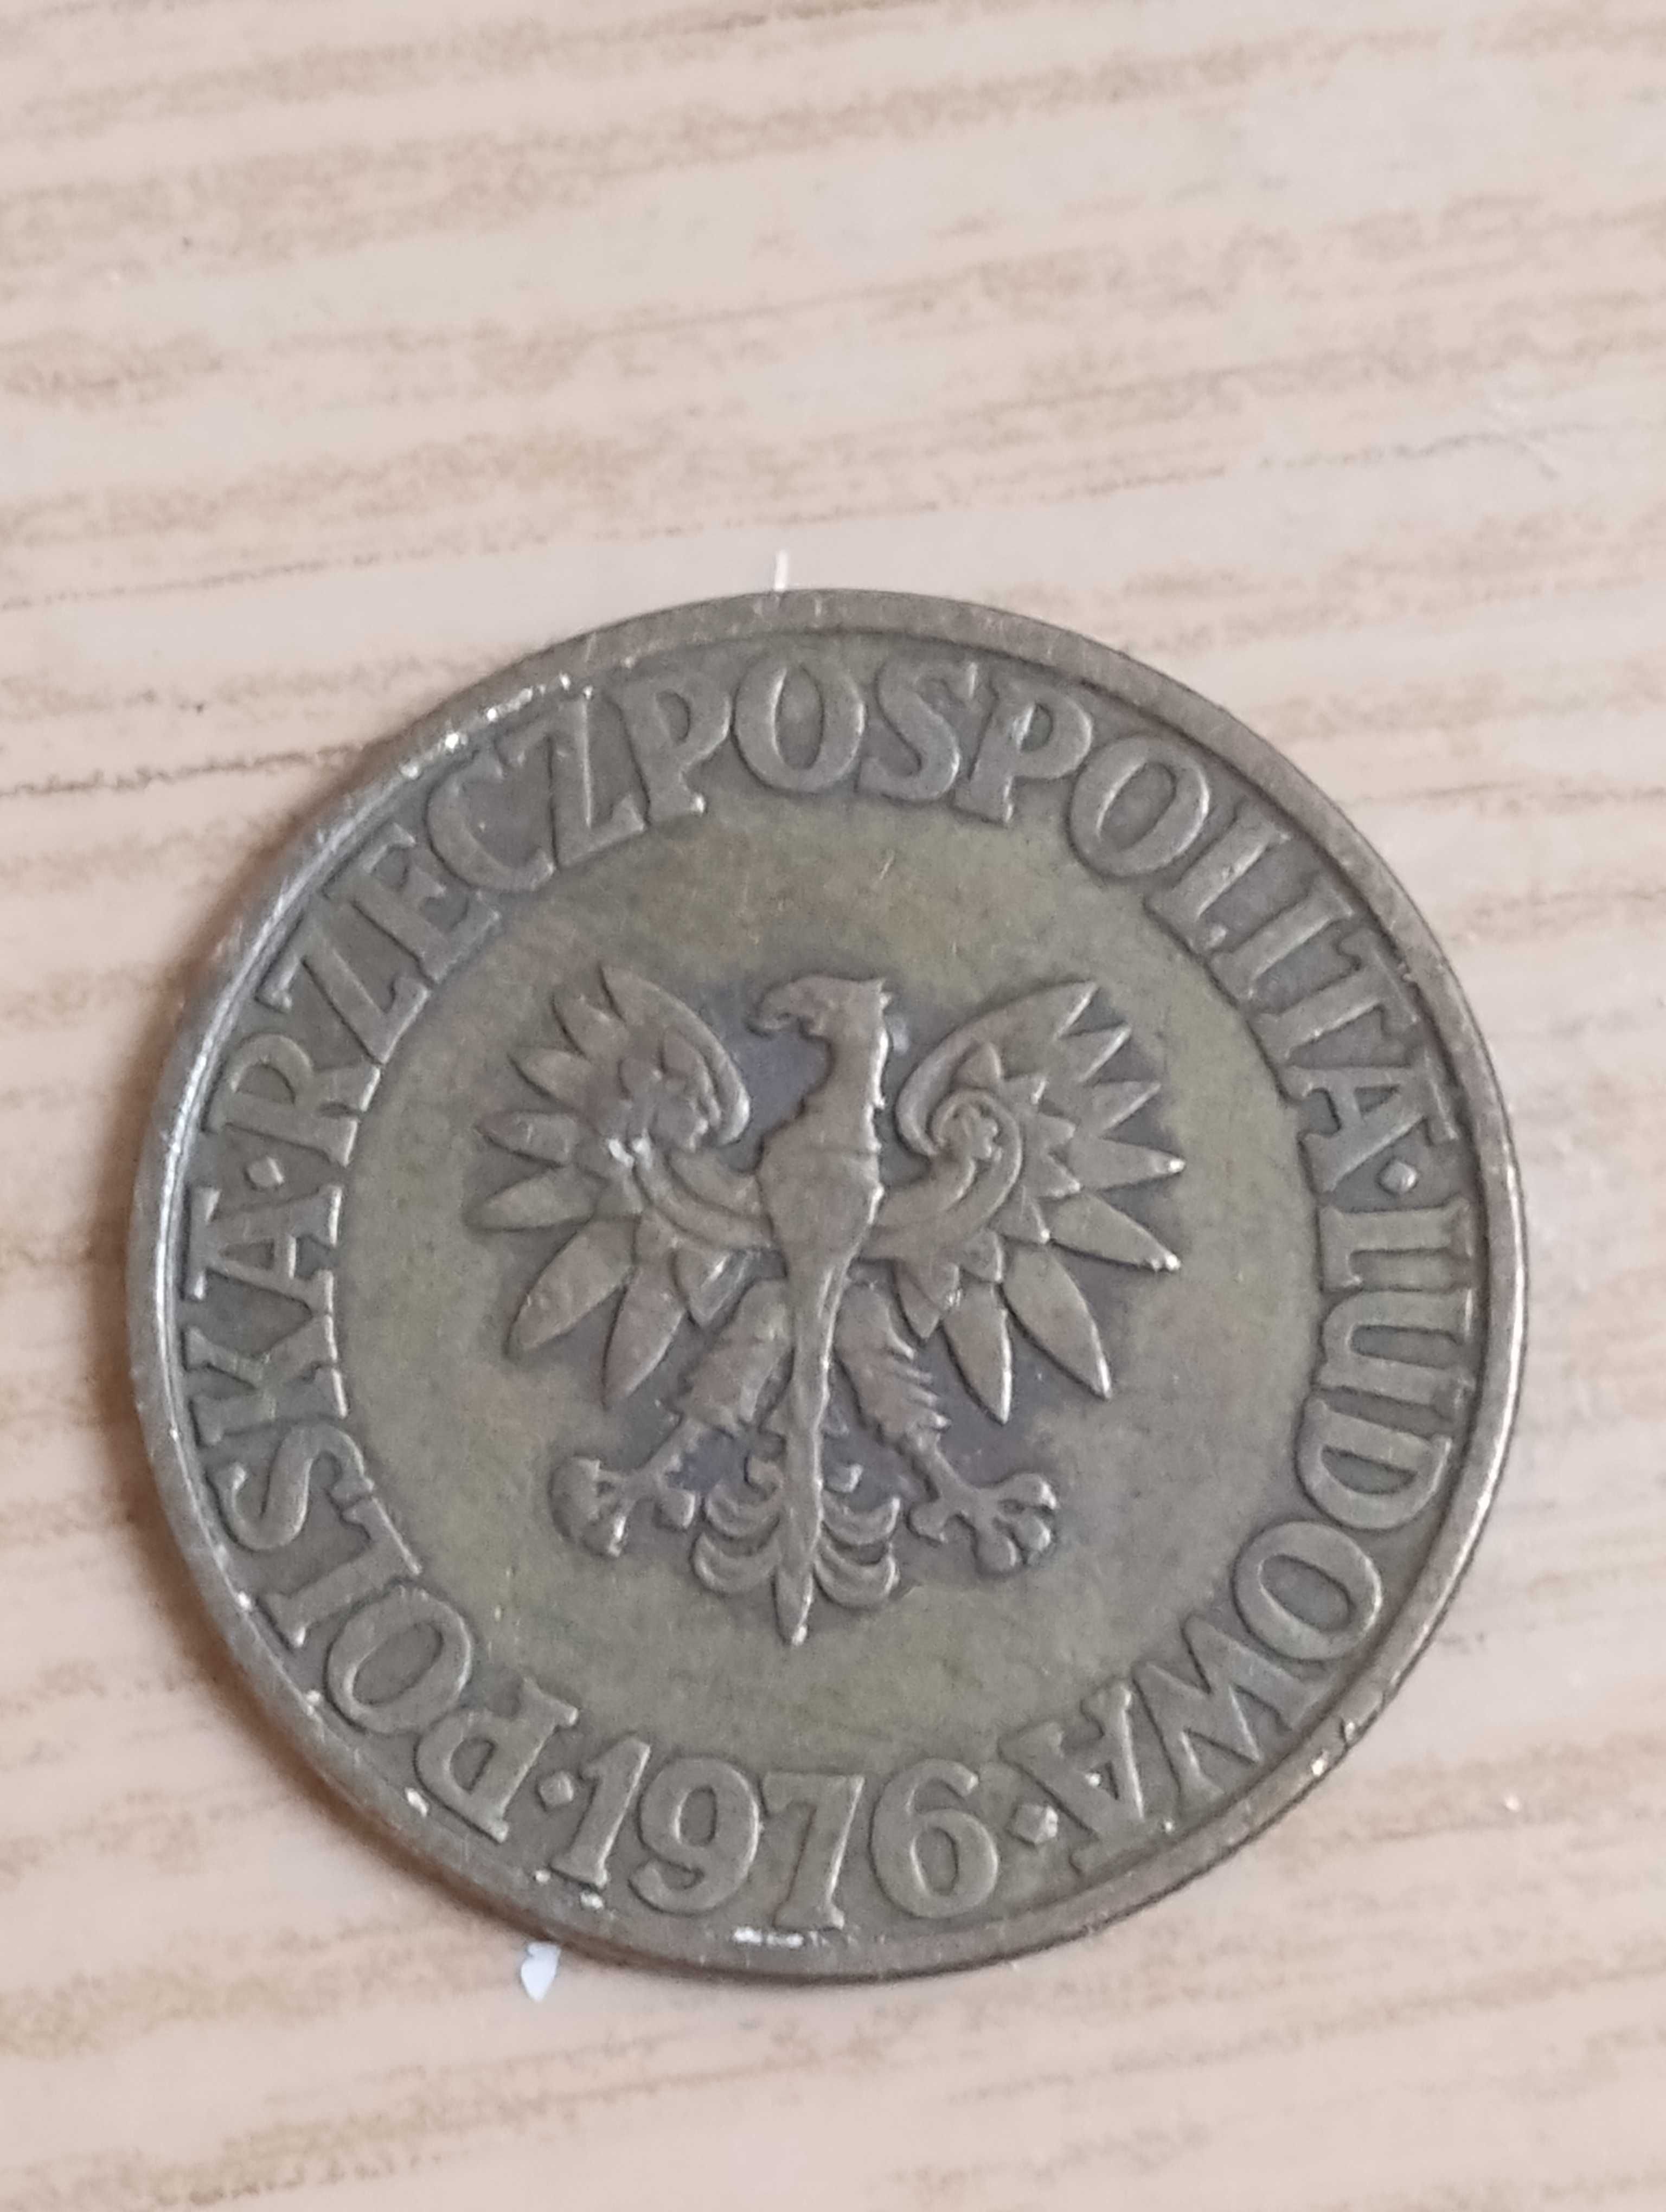 Moneta 5 zł prl 1976